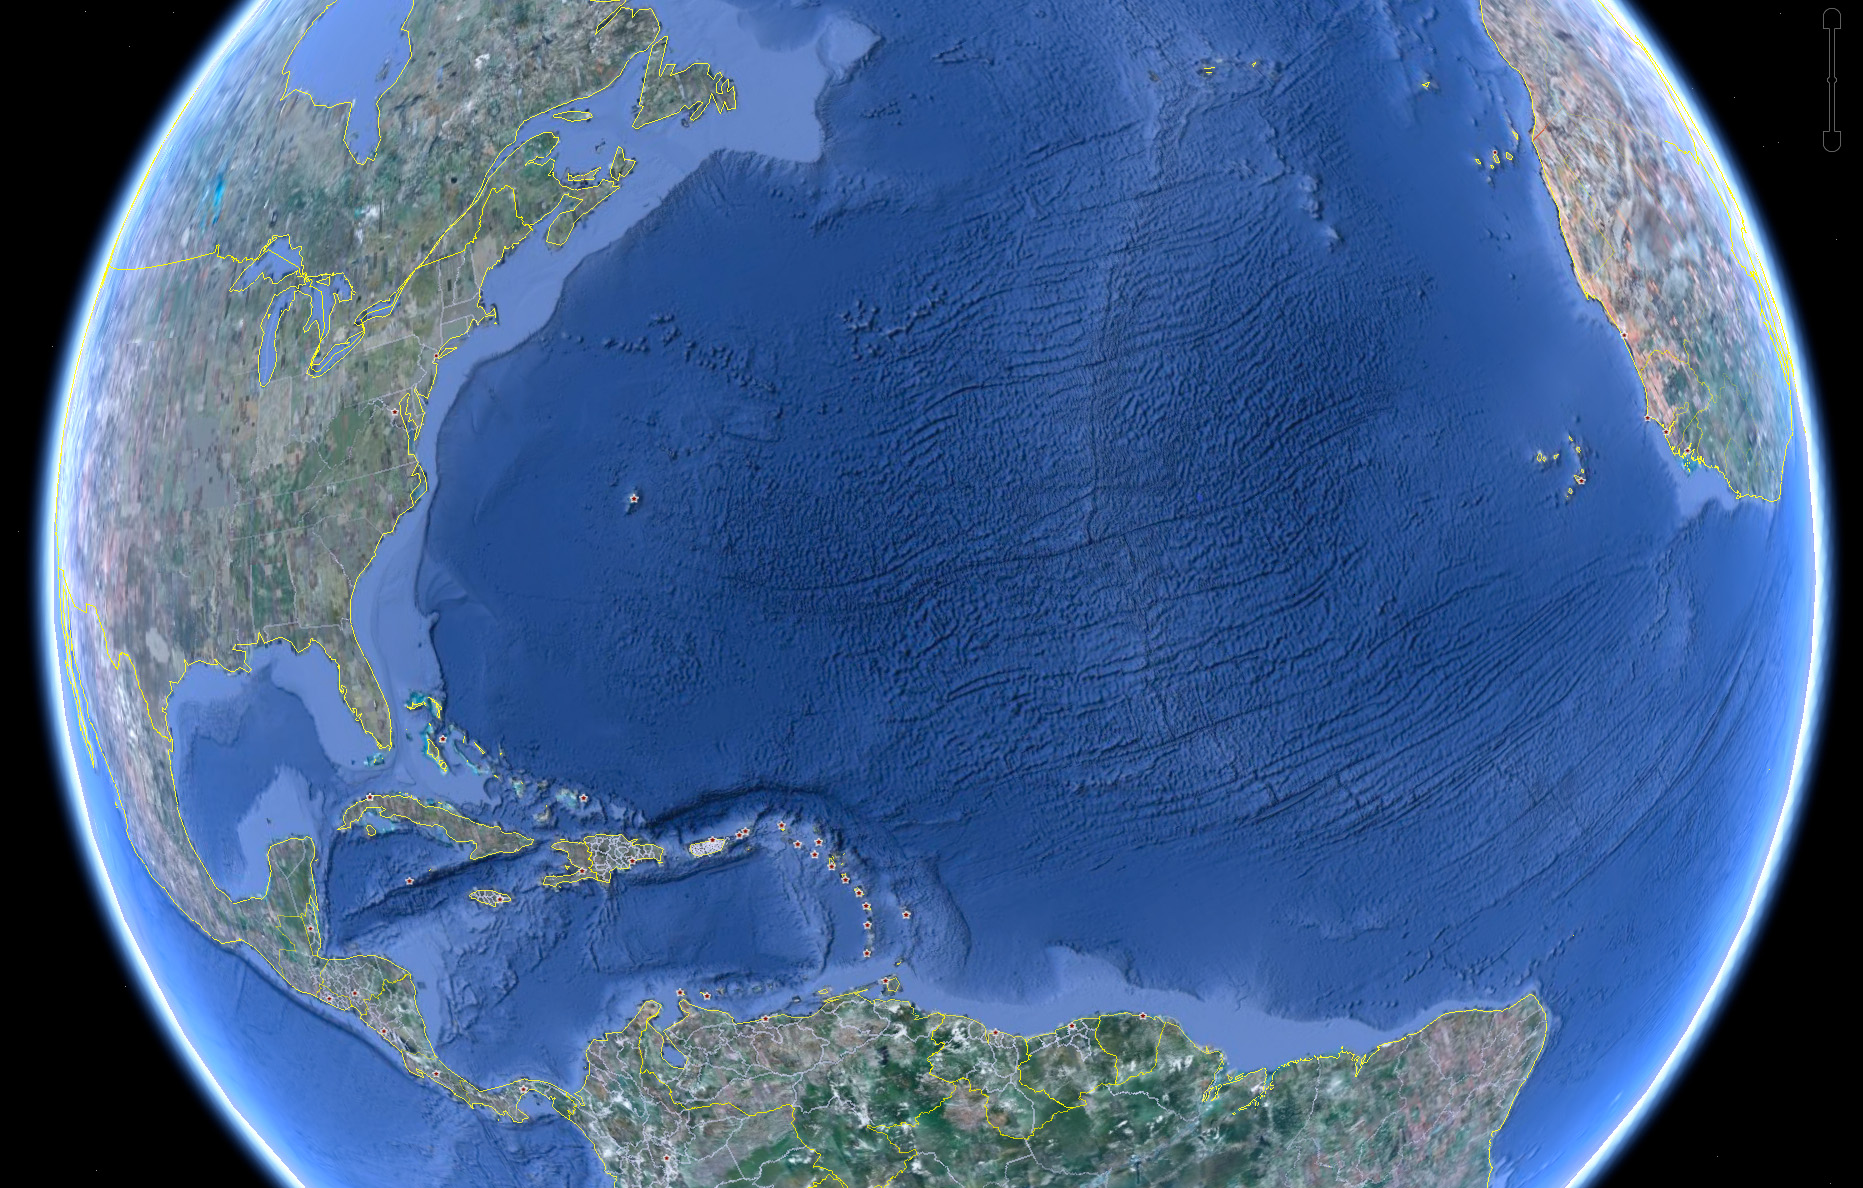 More world types. Атлантический океан со спутника. Тихий океан вид из космоса. Вид земли из космоса. Океан вид из космоса.